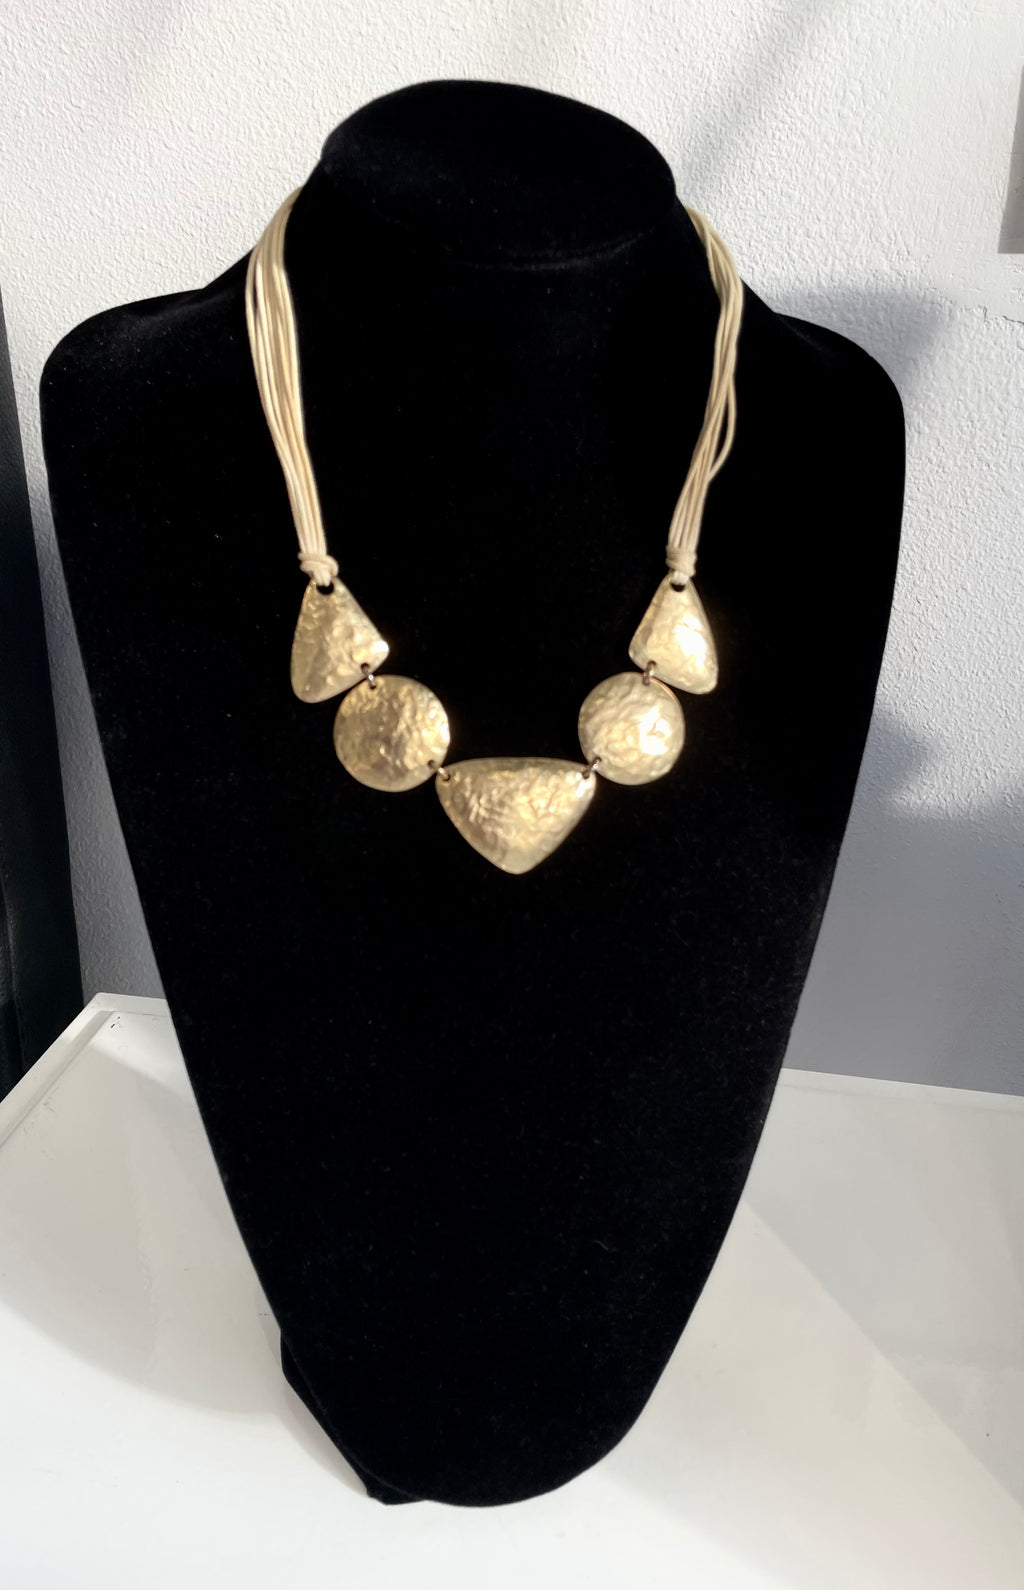 Voila - metal necklace